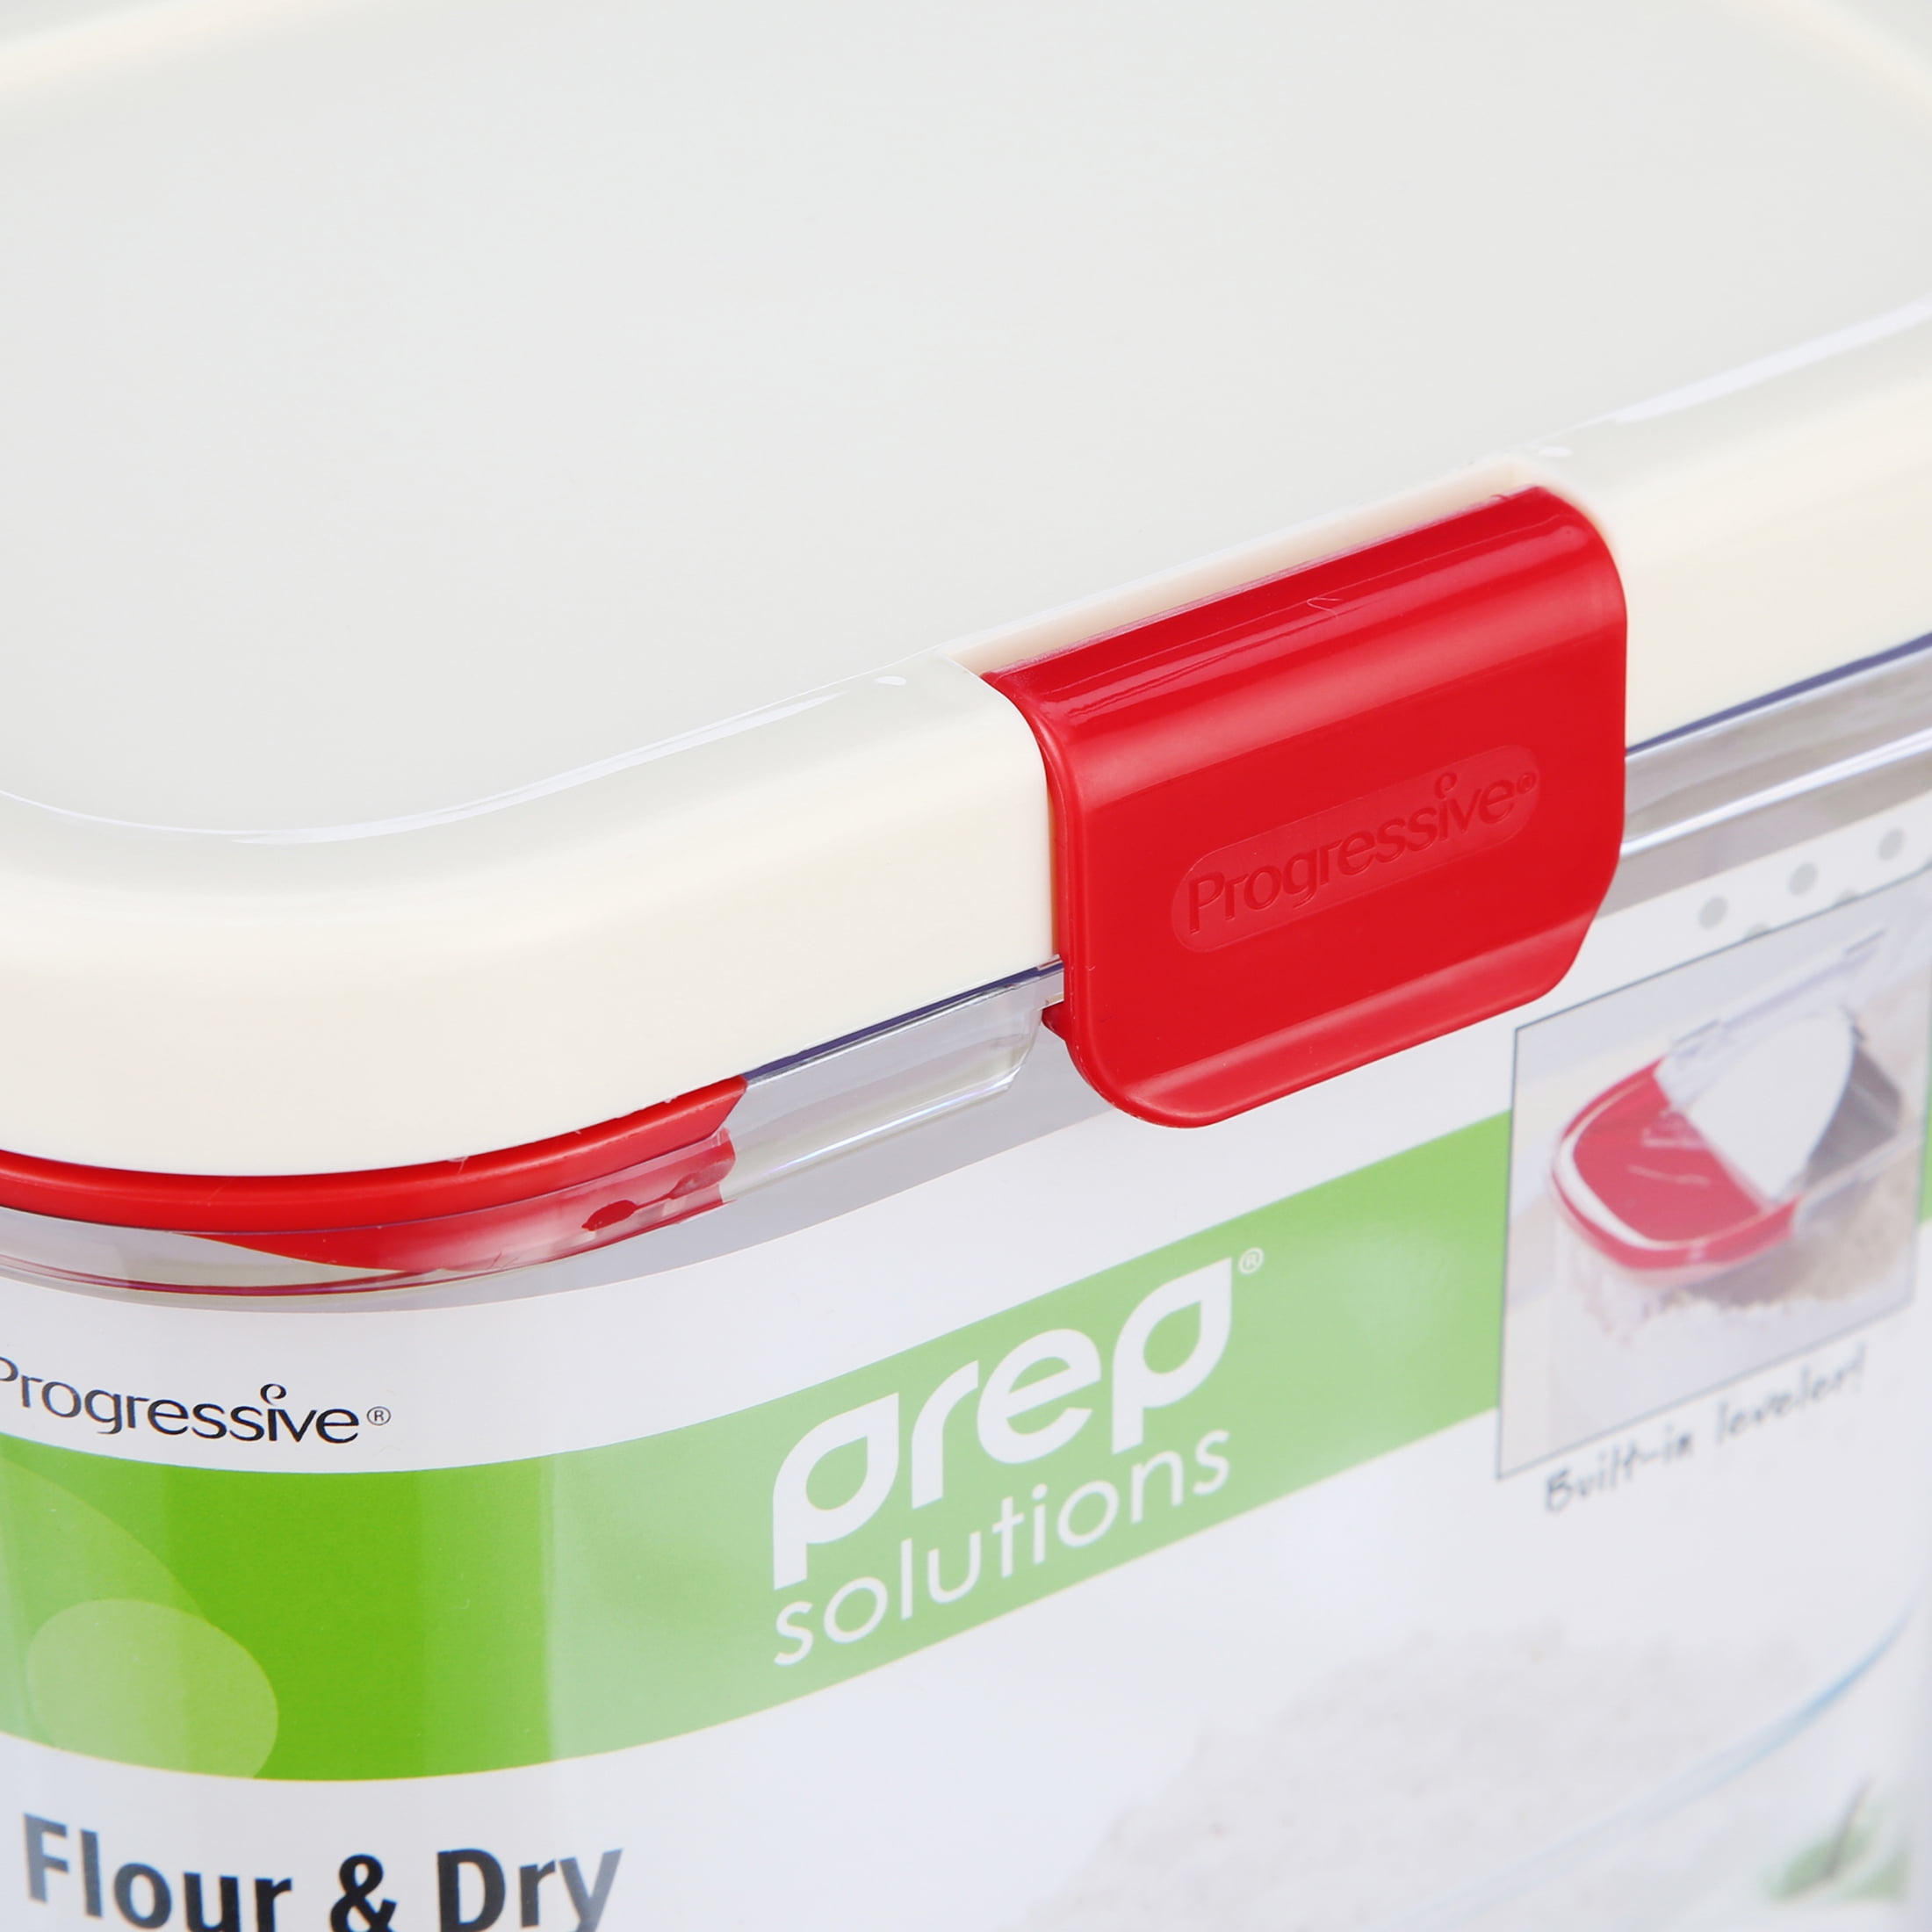 Progressive PrepWorks Flour Prokeeper Container - Shop Food Storage at H-E-B